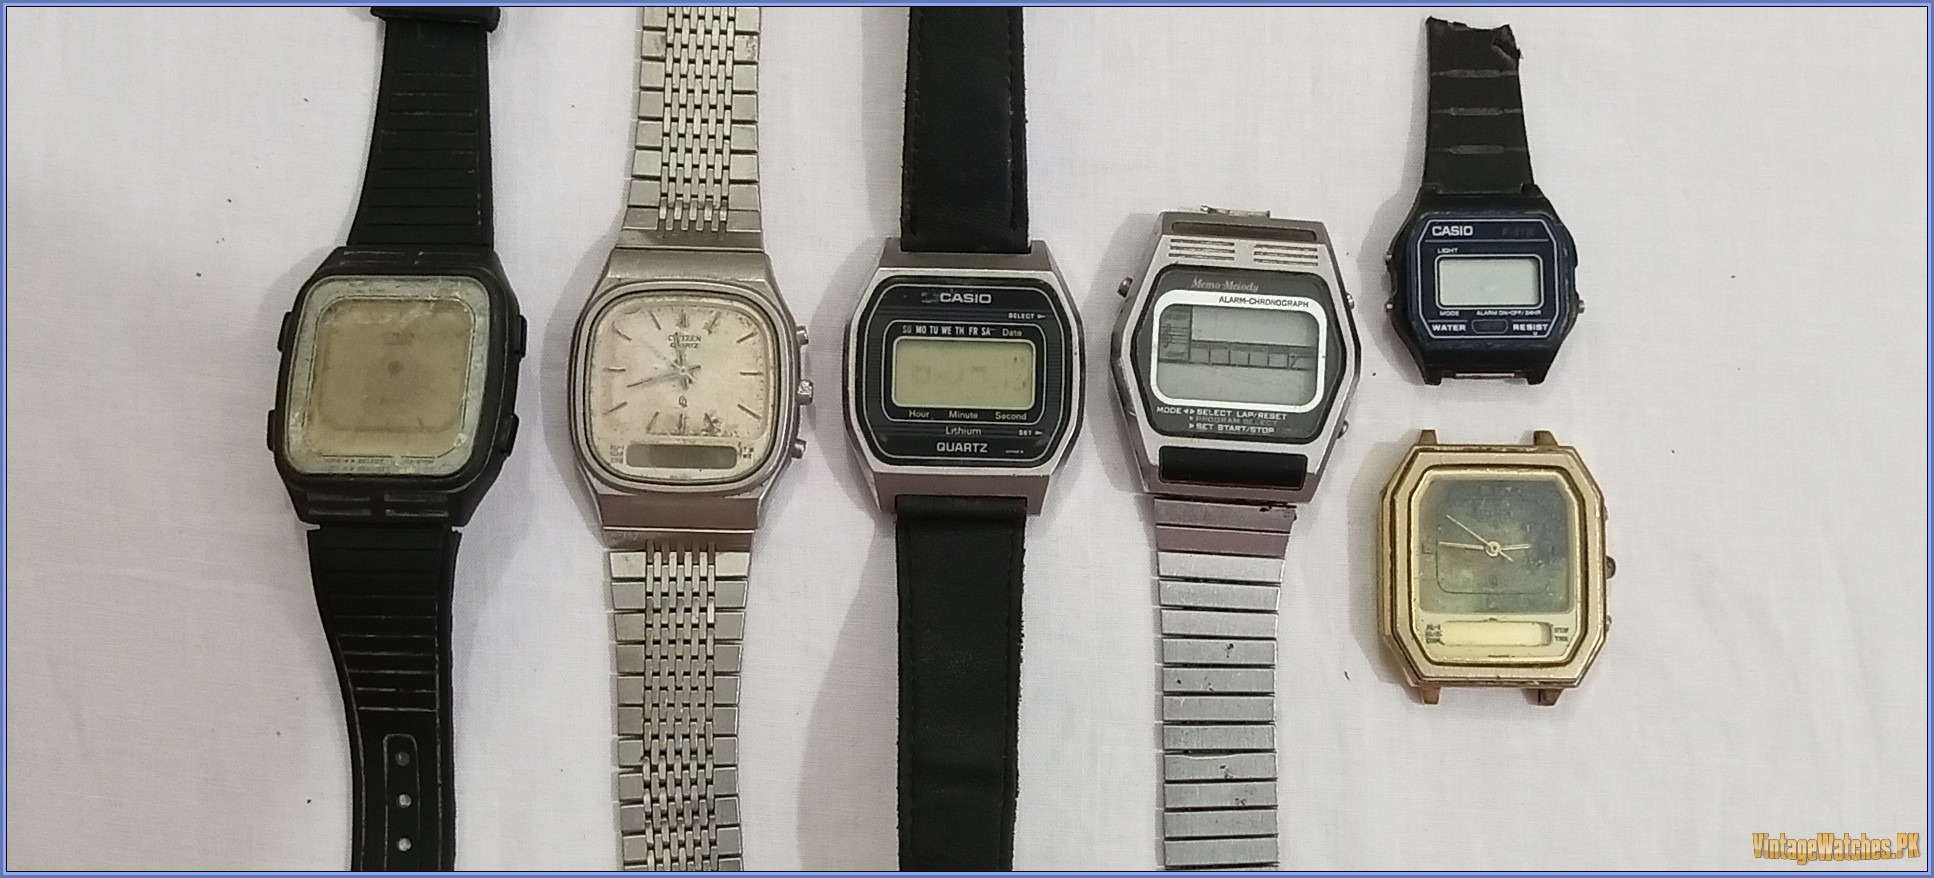 Lot 6 Original Vintage Old Classic Ana Digital Watches Casio Citizen 9570, 9560, 8950 - PK00017 - vintagewatches.pk